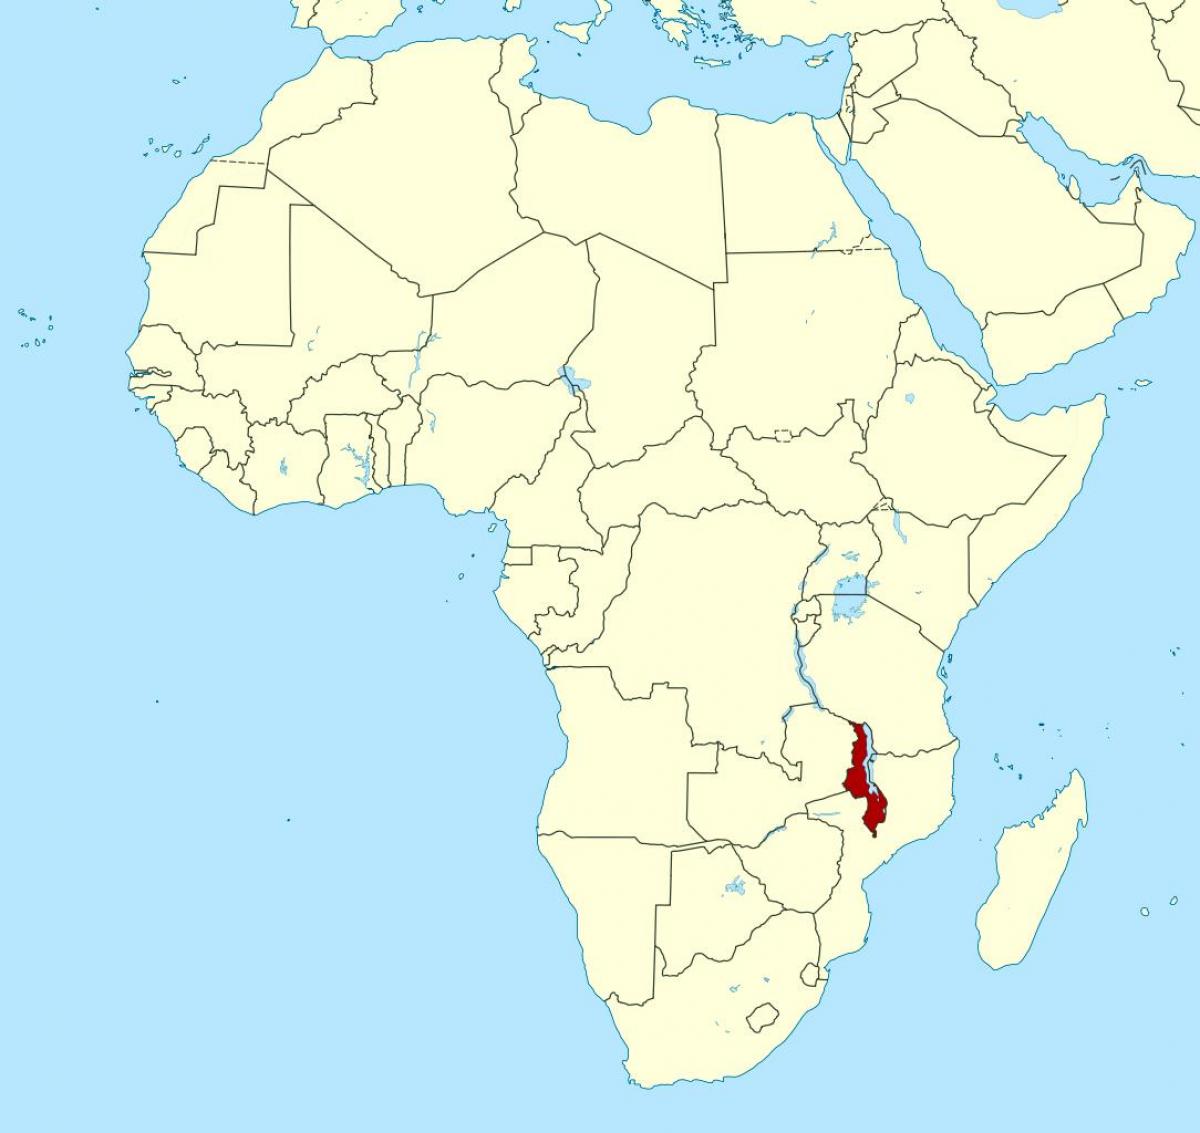 Malawi location on world map